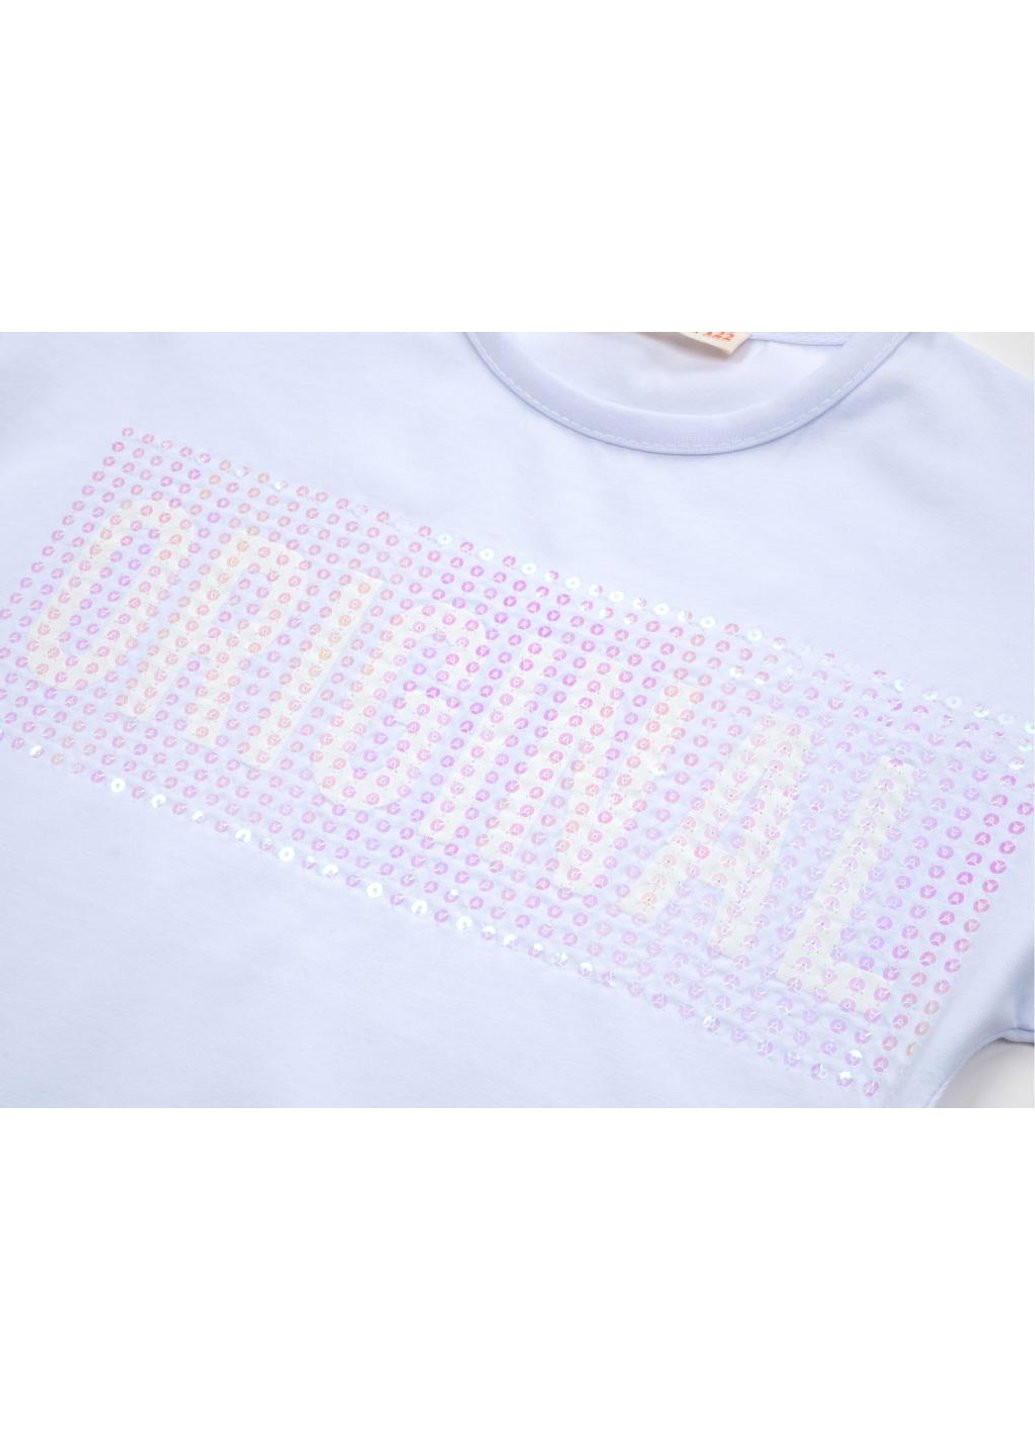 Комбінована футболка дитяча одяг з паєткою (3126-122g-white) Smile